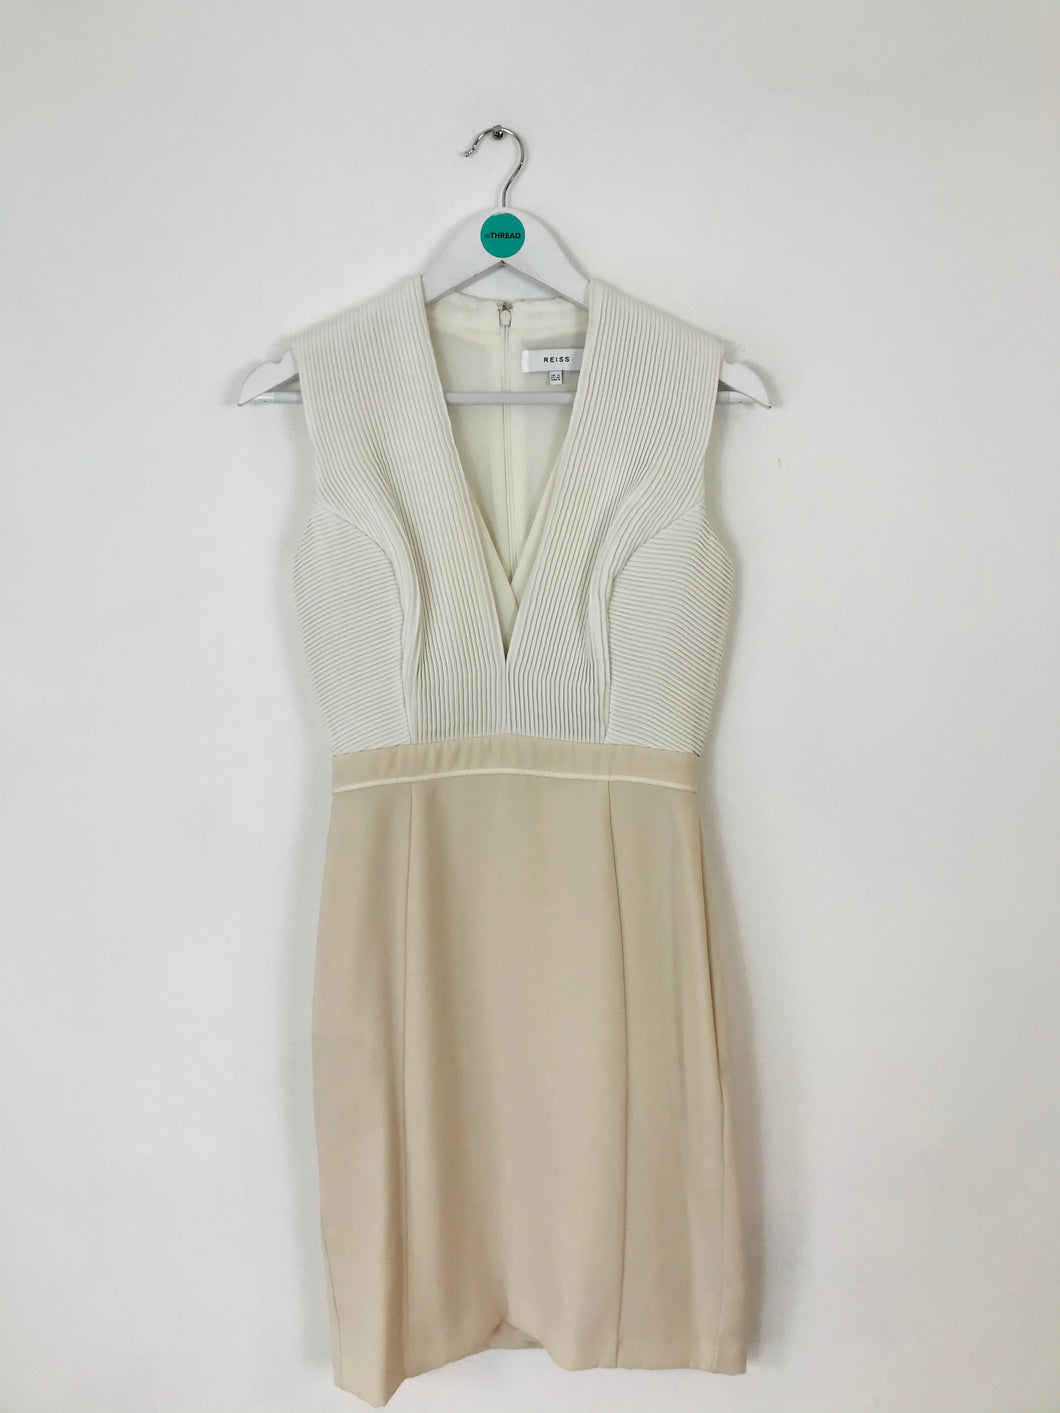 Reiss Women’s V Neck Pin-Tuck Sheath Mini Dress | UK8 | Cream White